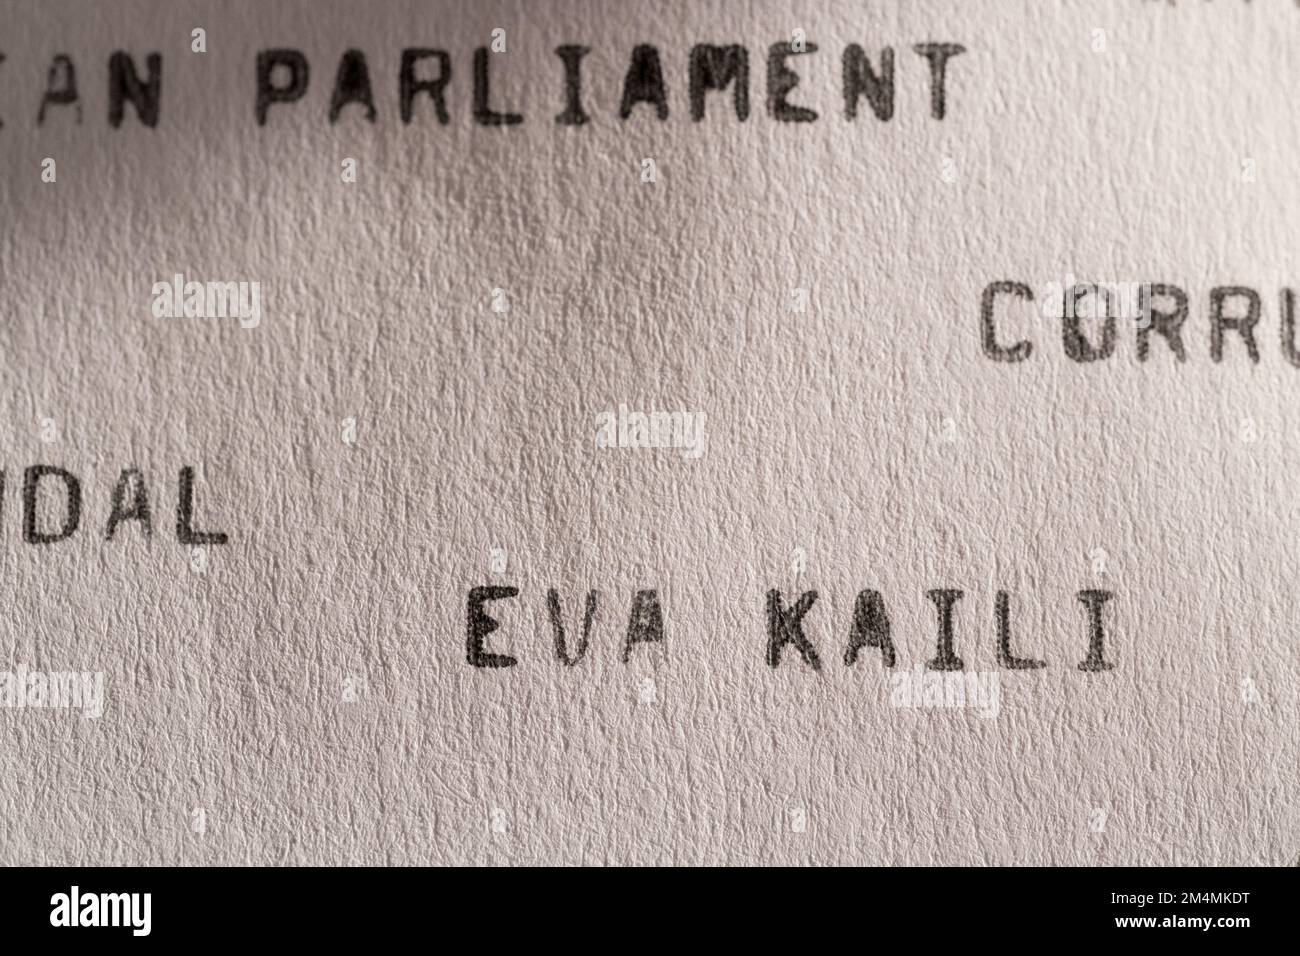 The qatargate scandal inside the European parliament writtten on a vintage typewriter Stock Photo